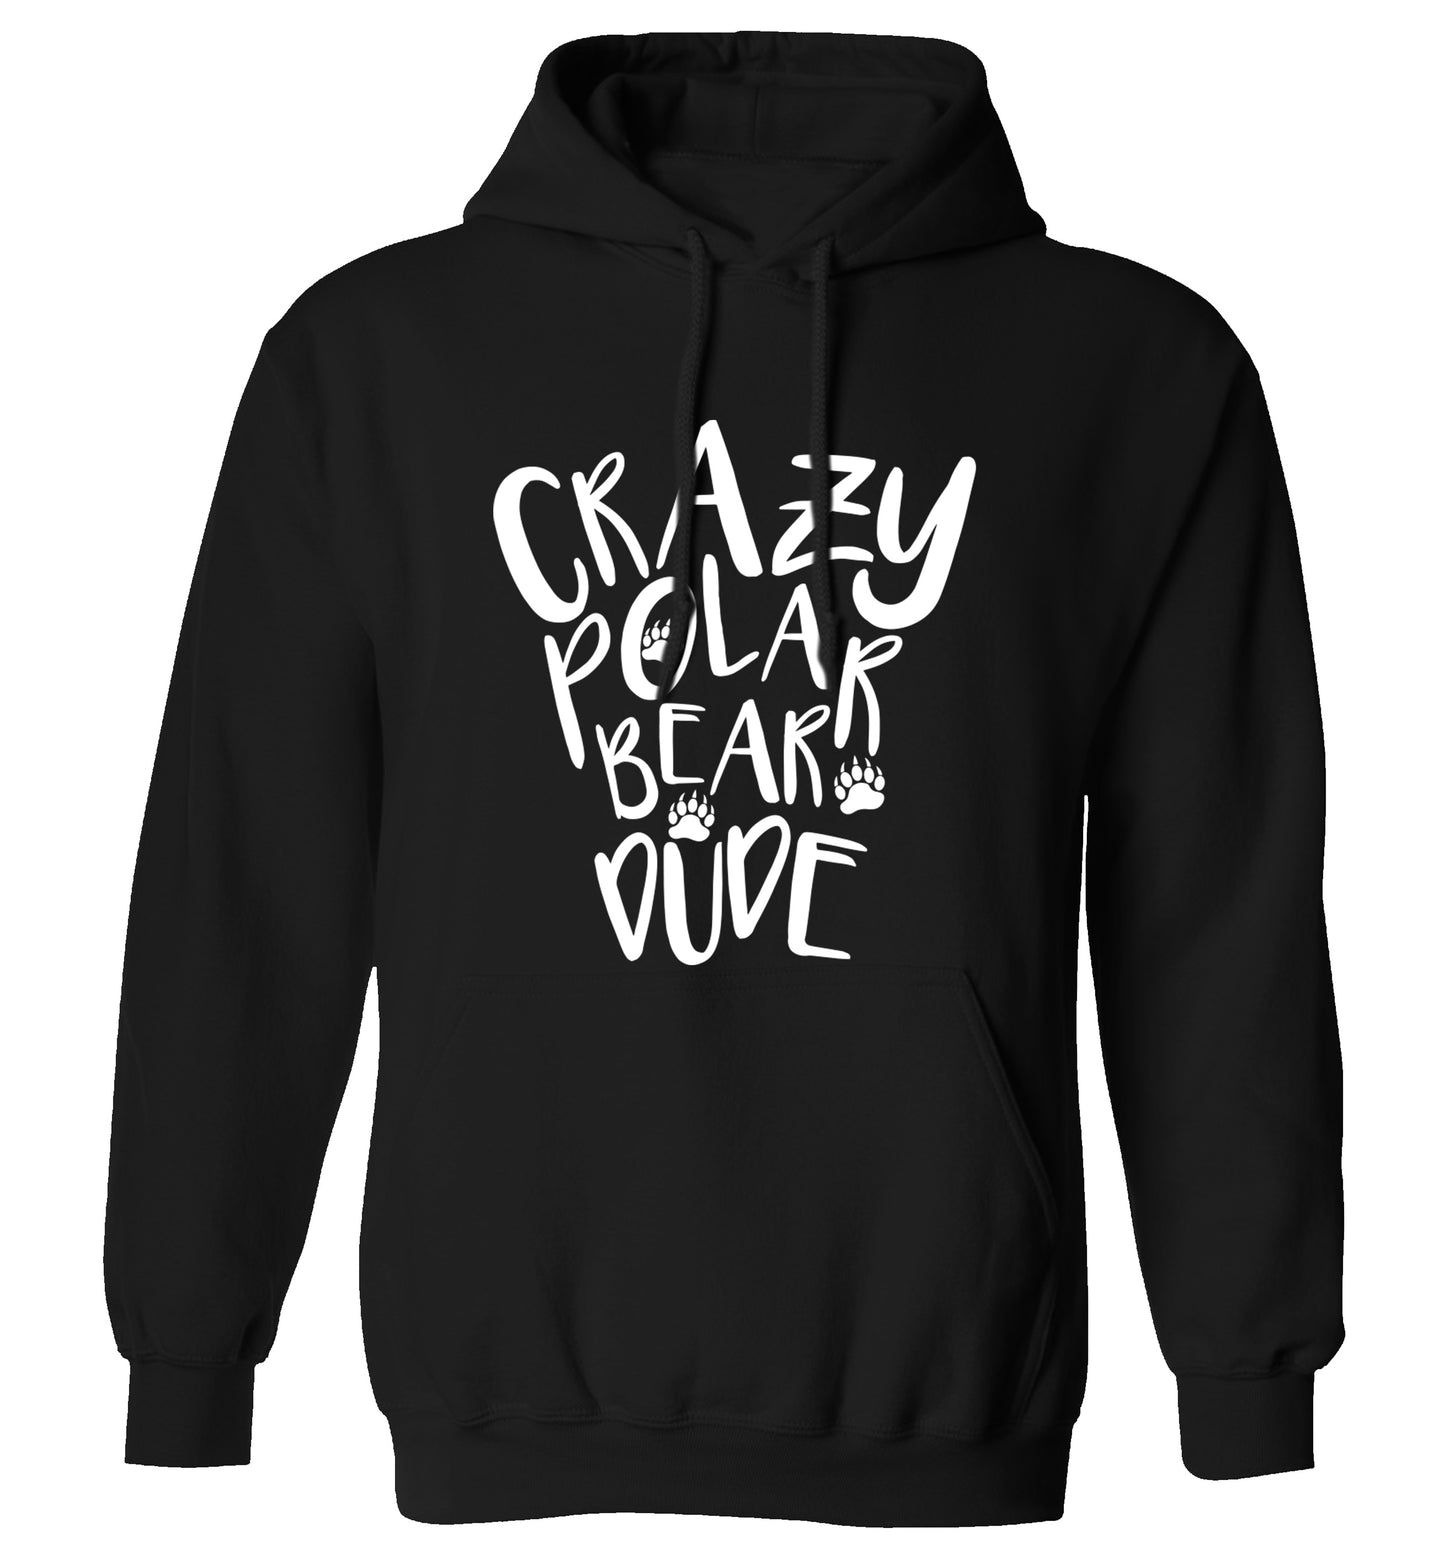 Crazy polar bear dude adults unisex black hoodie 2XL